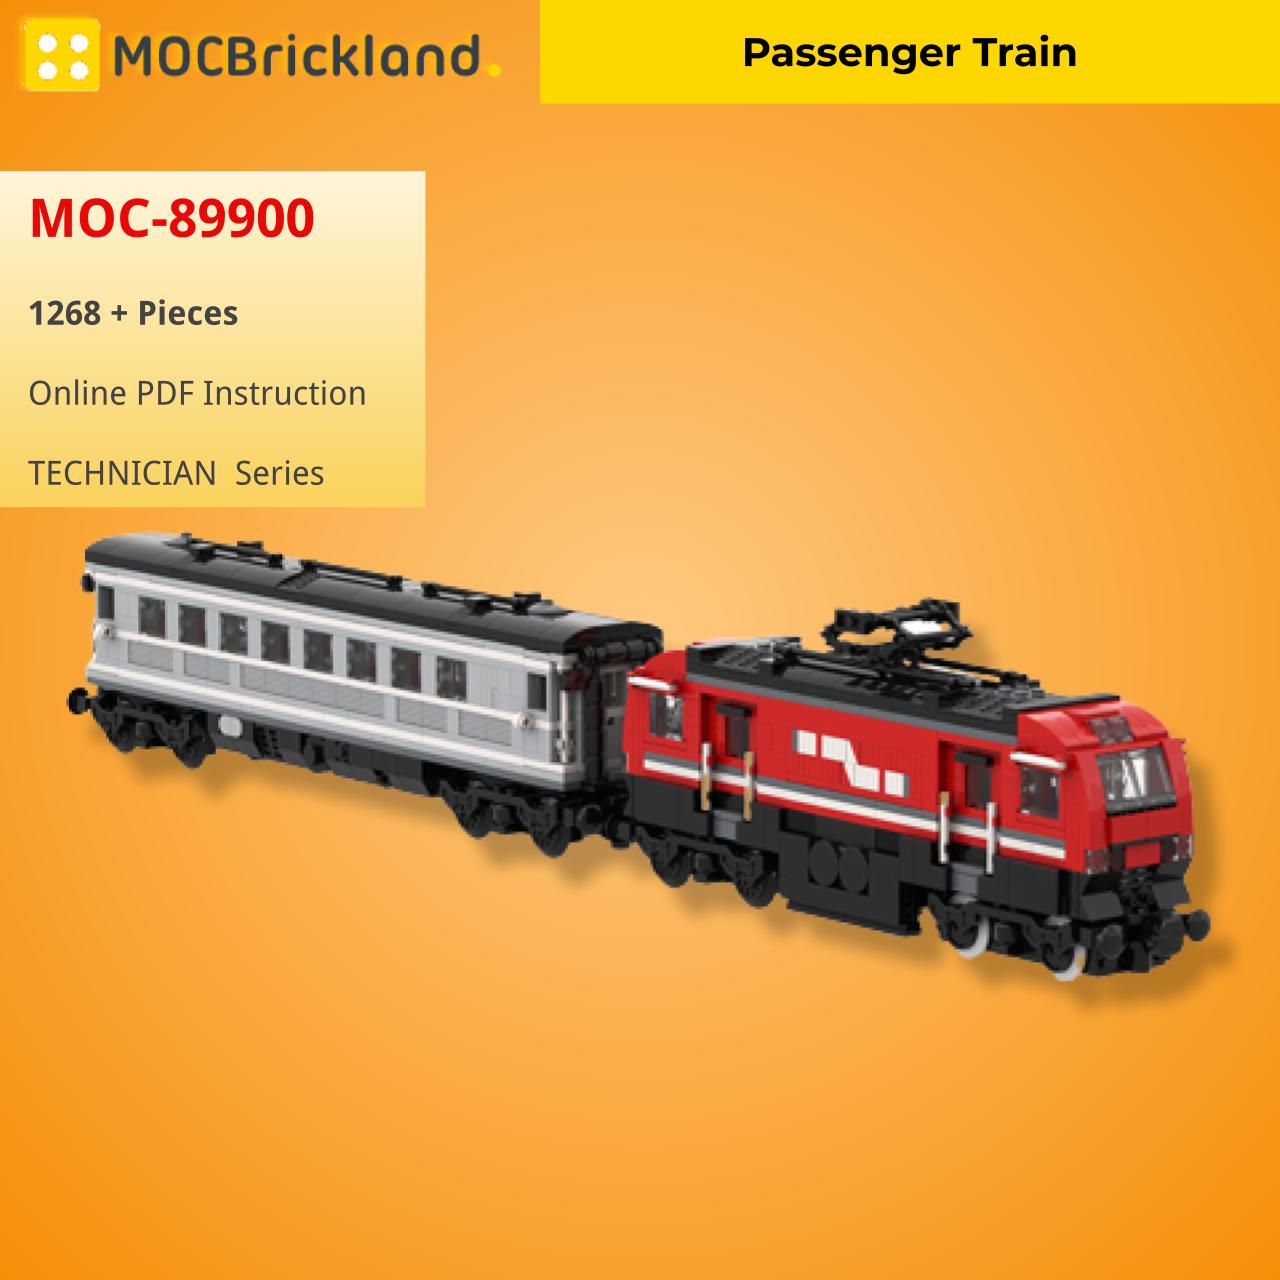 technician moc 89900 passenger train mocbrickland 4618 1